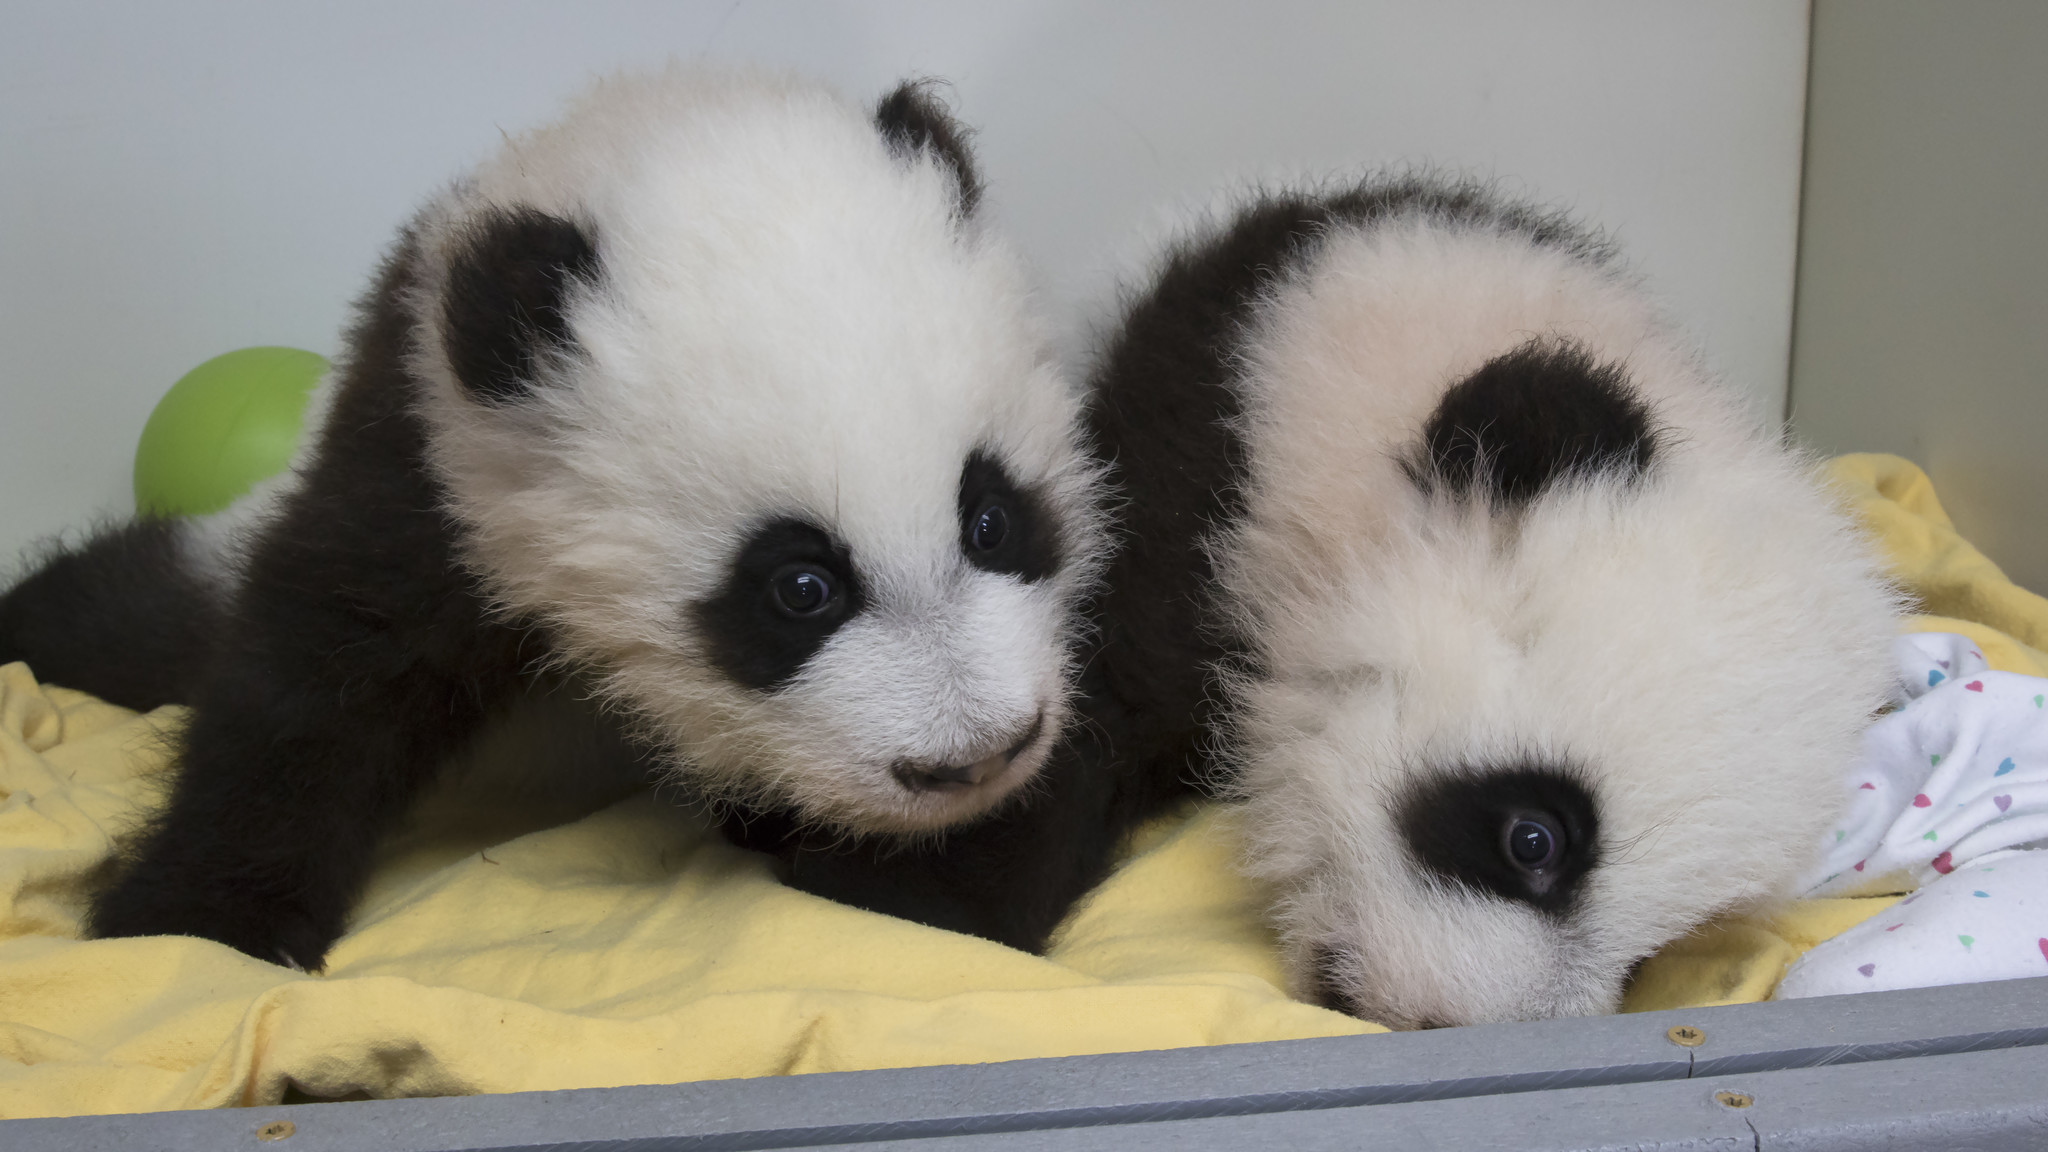 Giant panda cubs in Atlanta zoo have names - Chicago Tribune